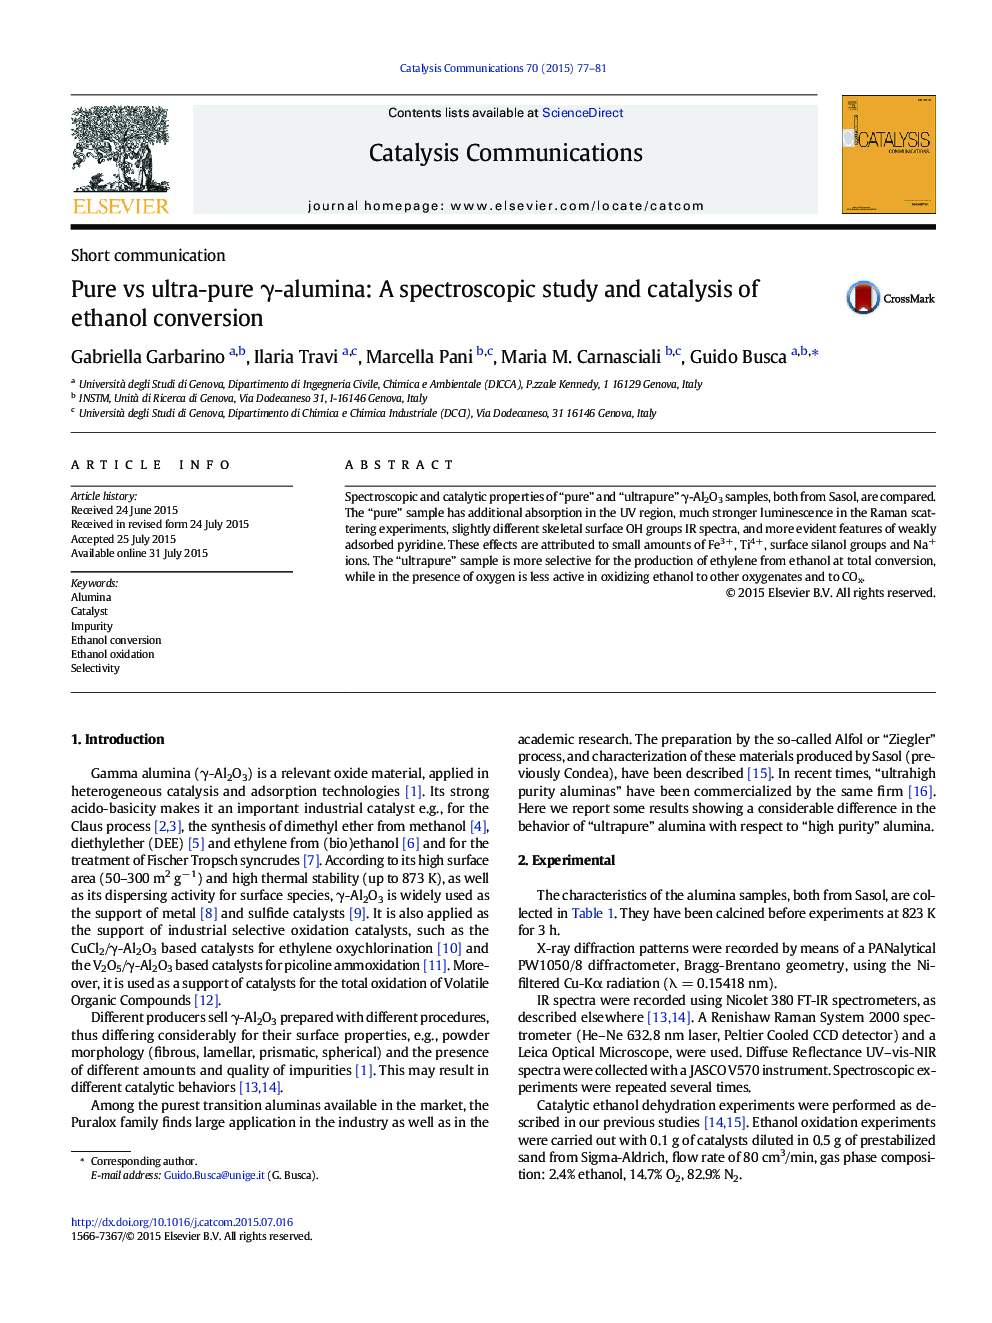 Pure vs ultra-pure γ-alumina: A spectroscopic study and catalysis of ethanol conversion